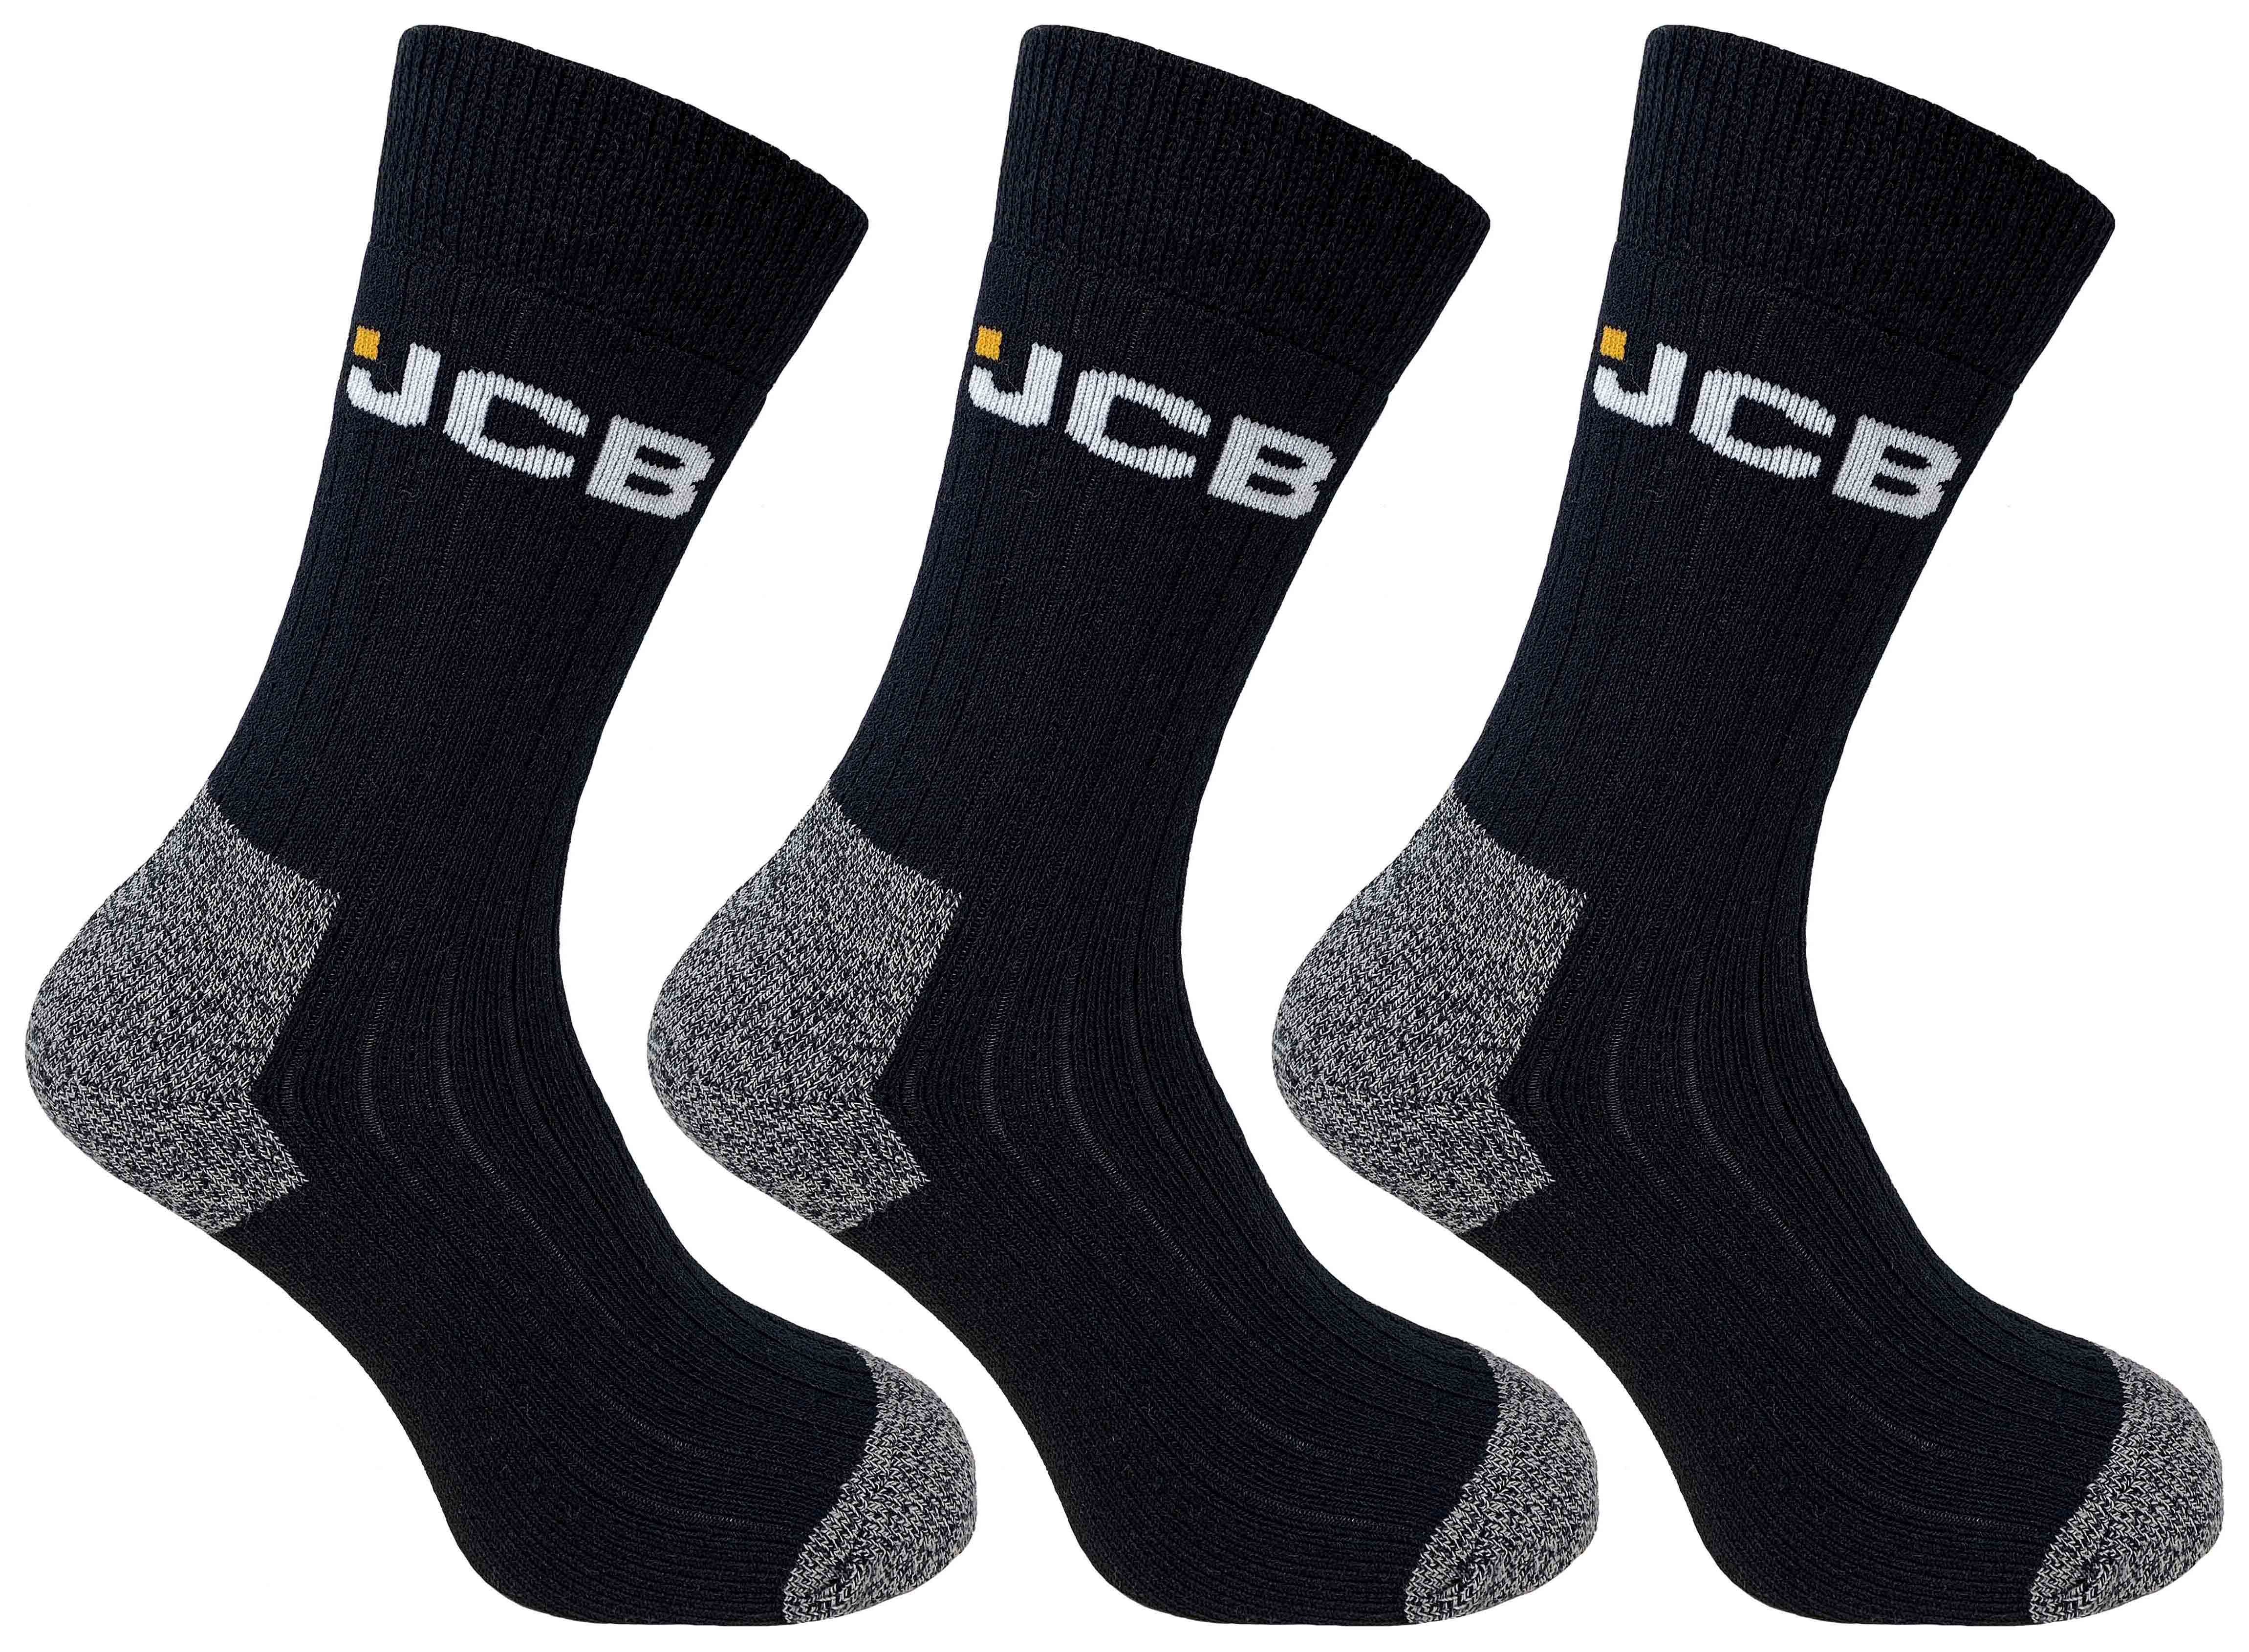 JCB JCBX000025 Workwear Apparel Socks Pack of 3 Size 6 - 11